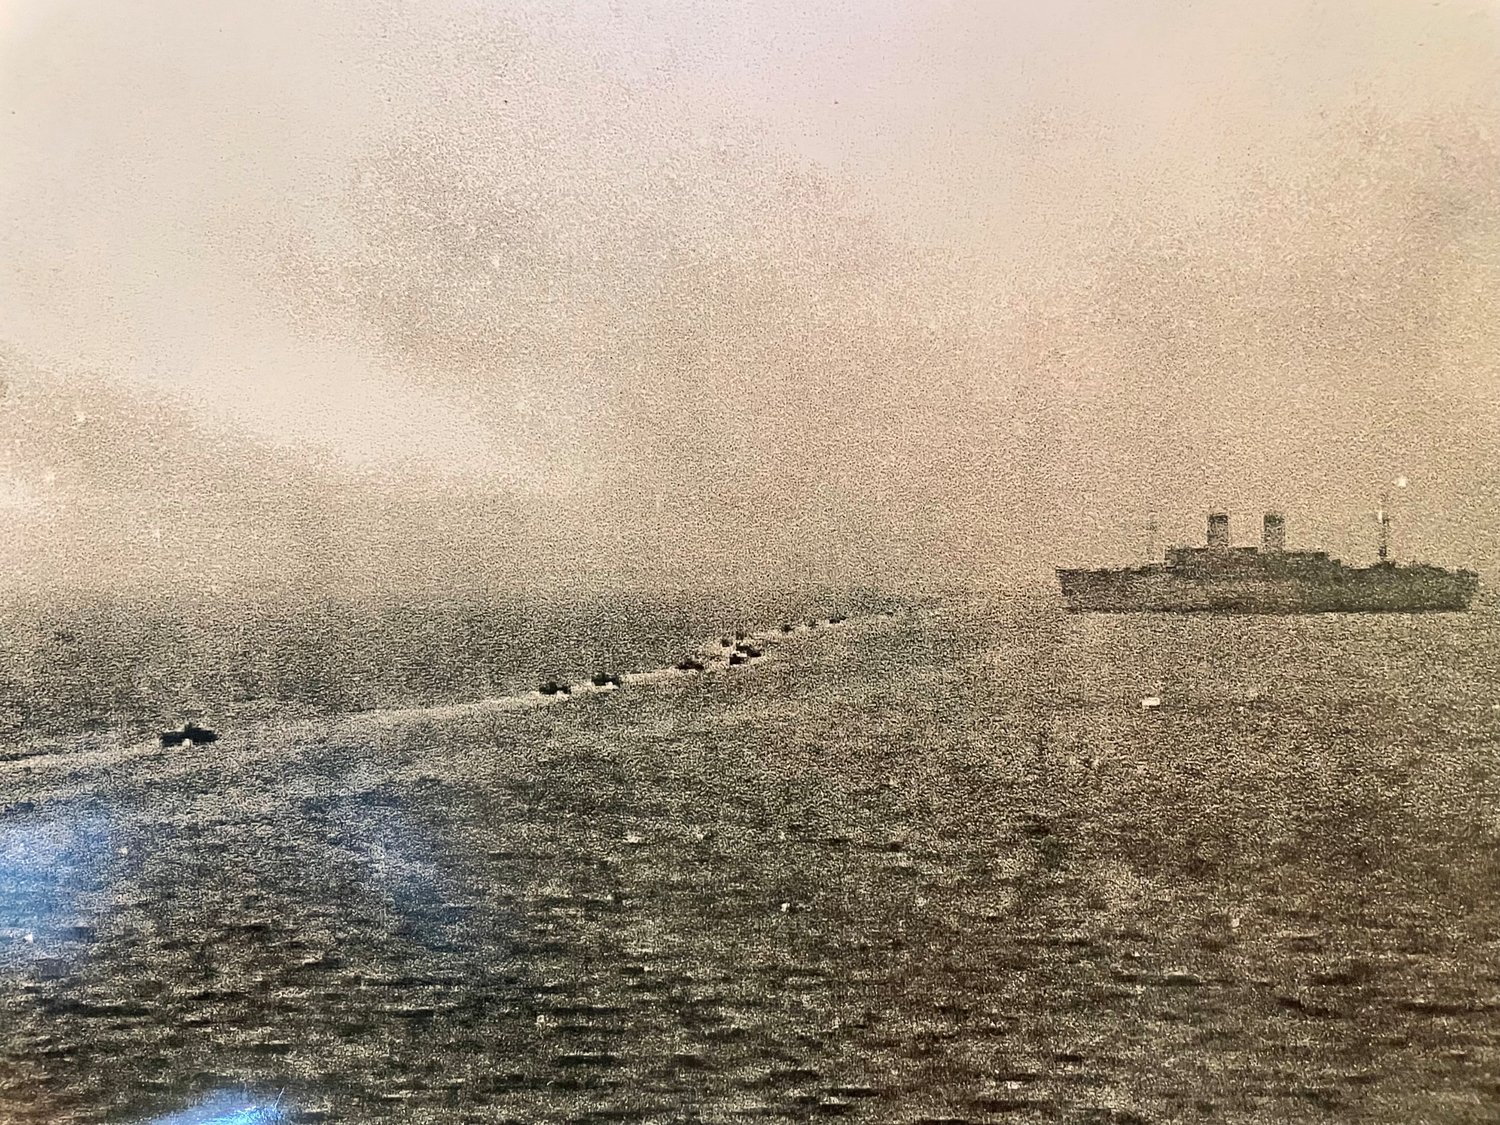 Landing craft can be seen transporting men to the USS General Black during the Korean War.